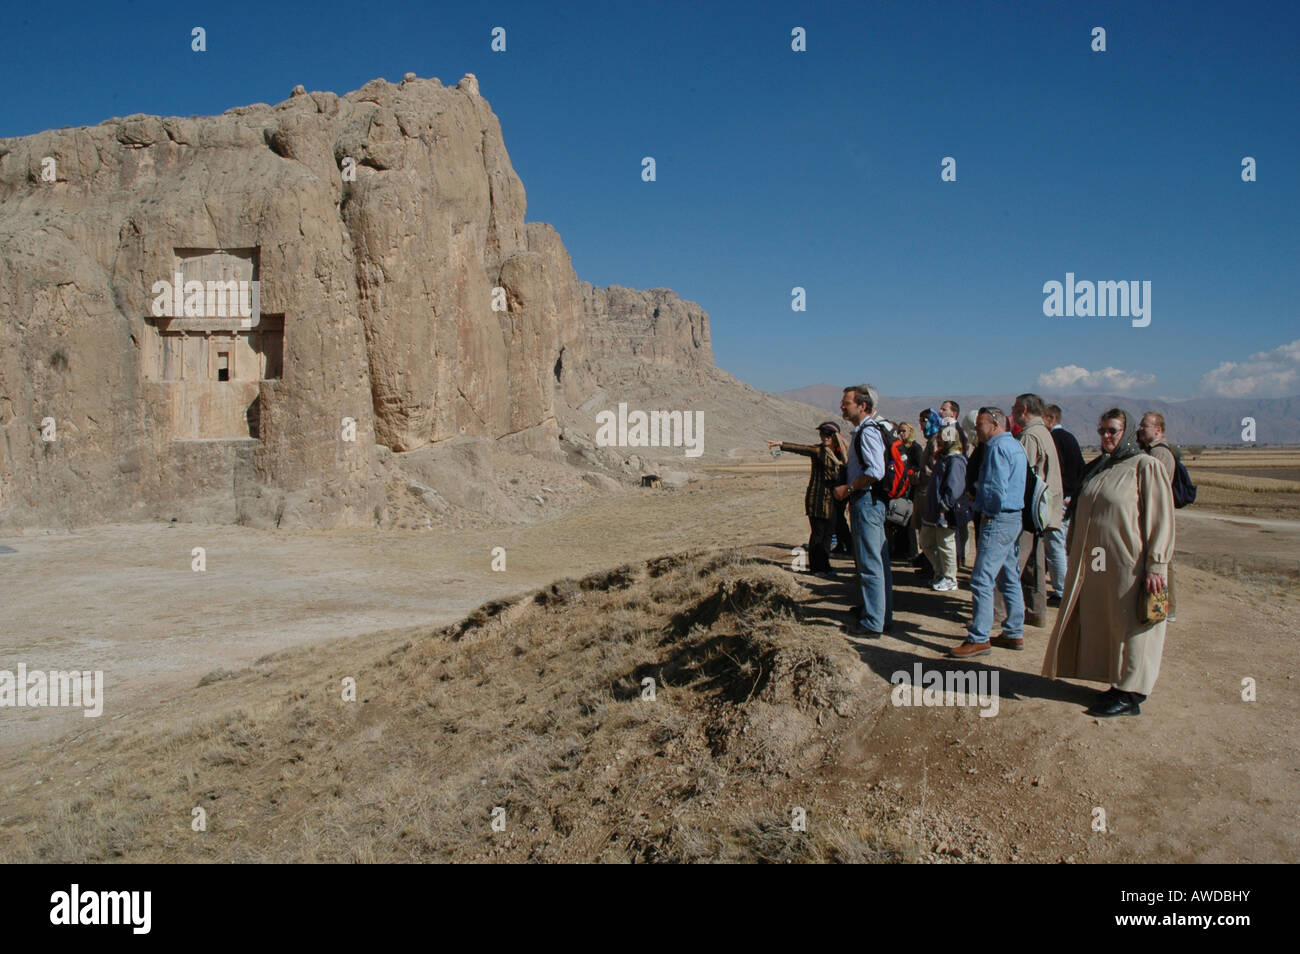 Rock graves of kings Dareios I., Dareios II., Xerxes I. and Artaxerxes I., Naqsh-e Rostam, Iran Stock Photo